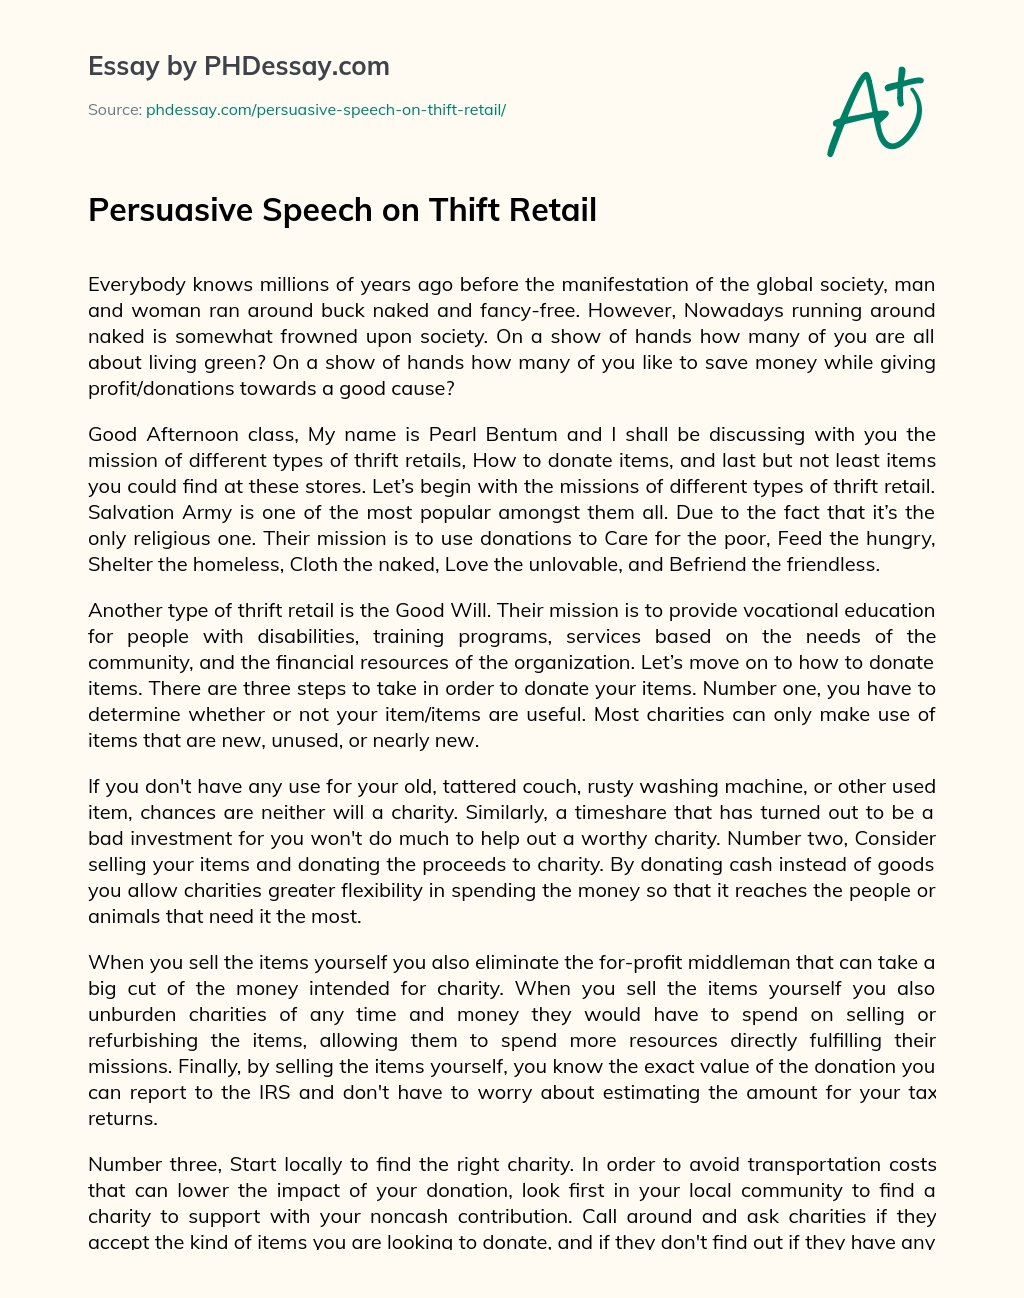 Persuasive Speech on Thift Retail essay